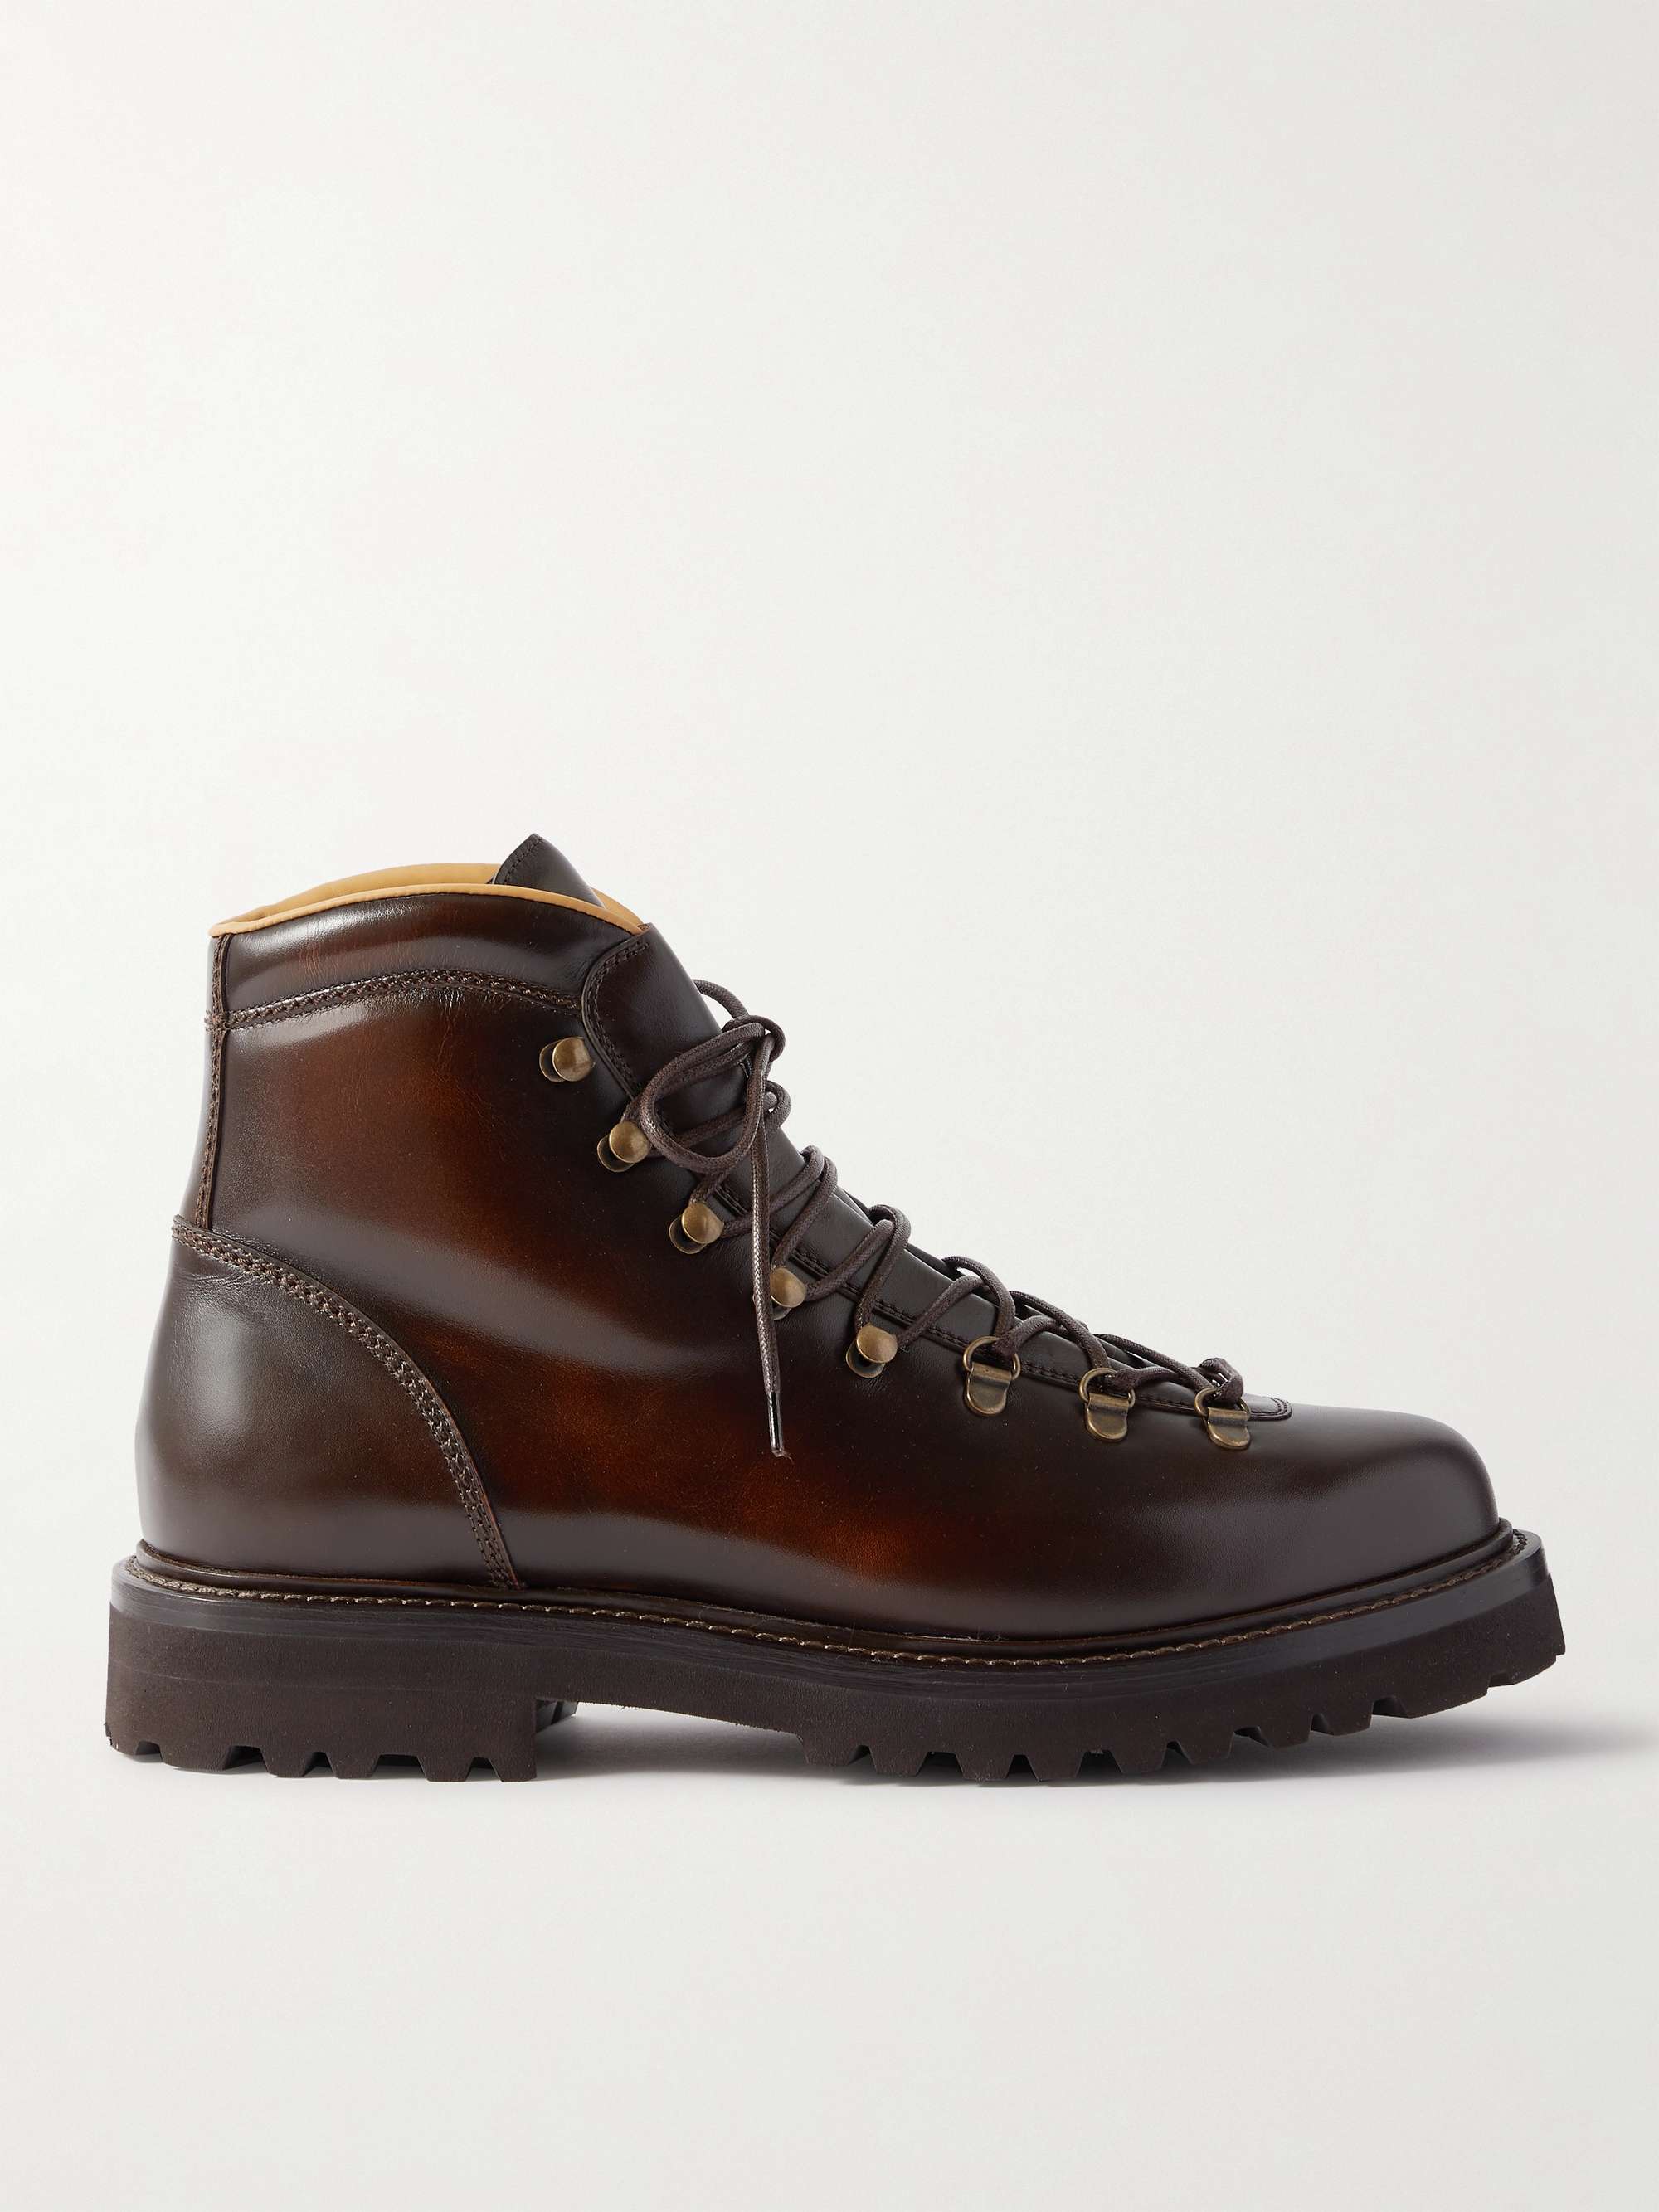 BRUNELLO CUCINELLI Leather Hiking Boots | MR PORTER